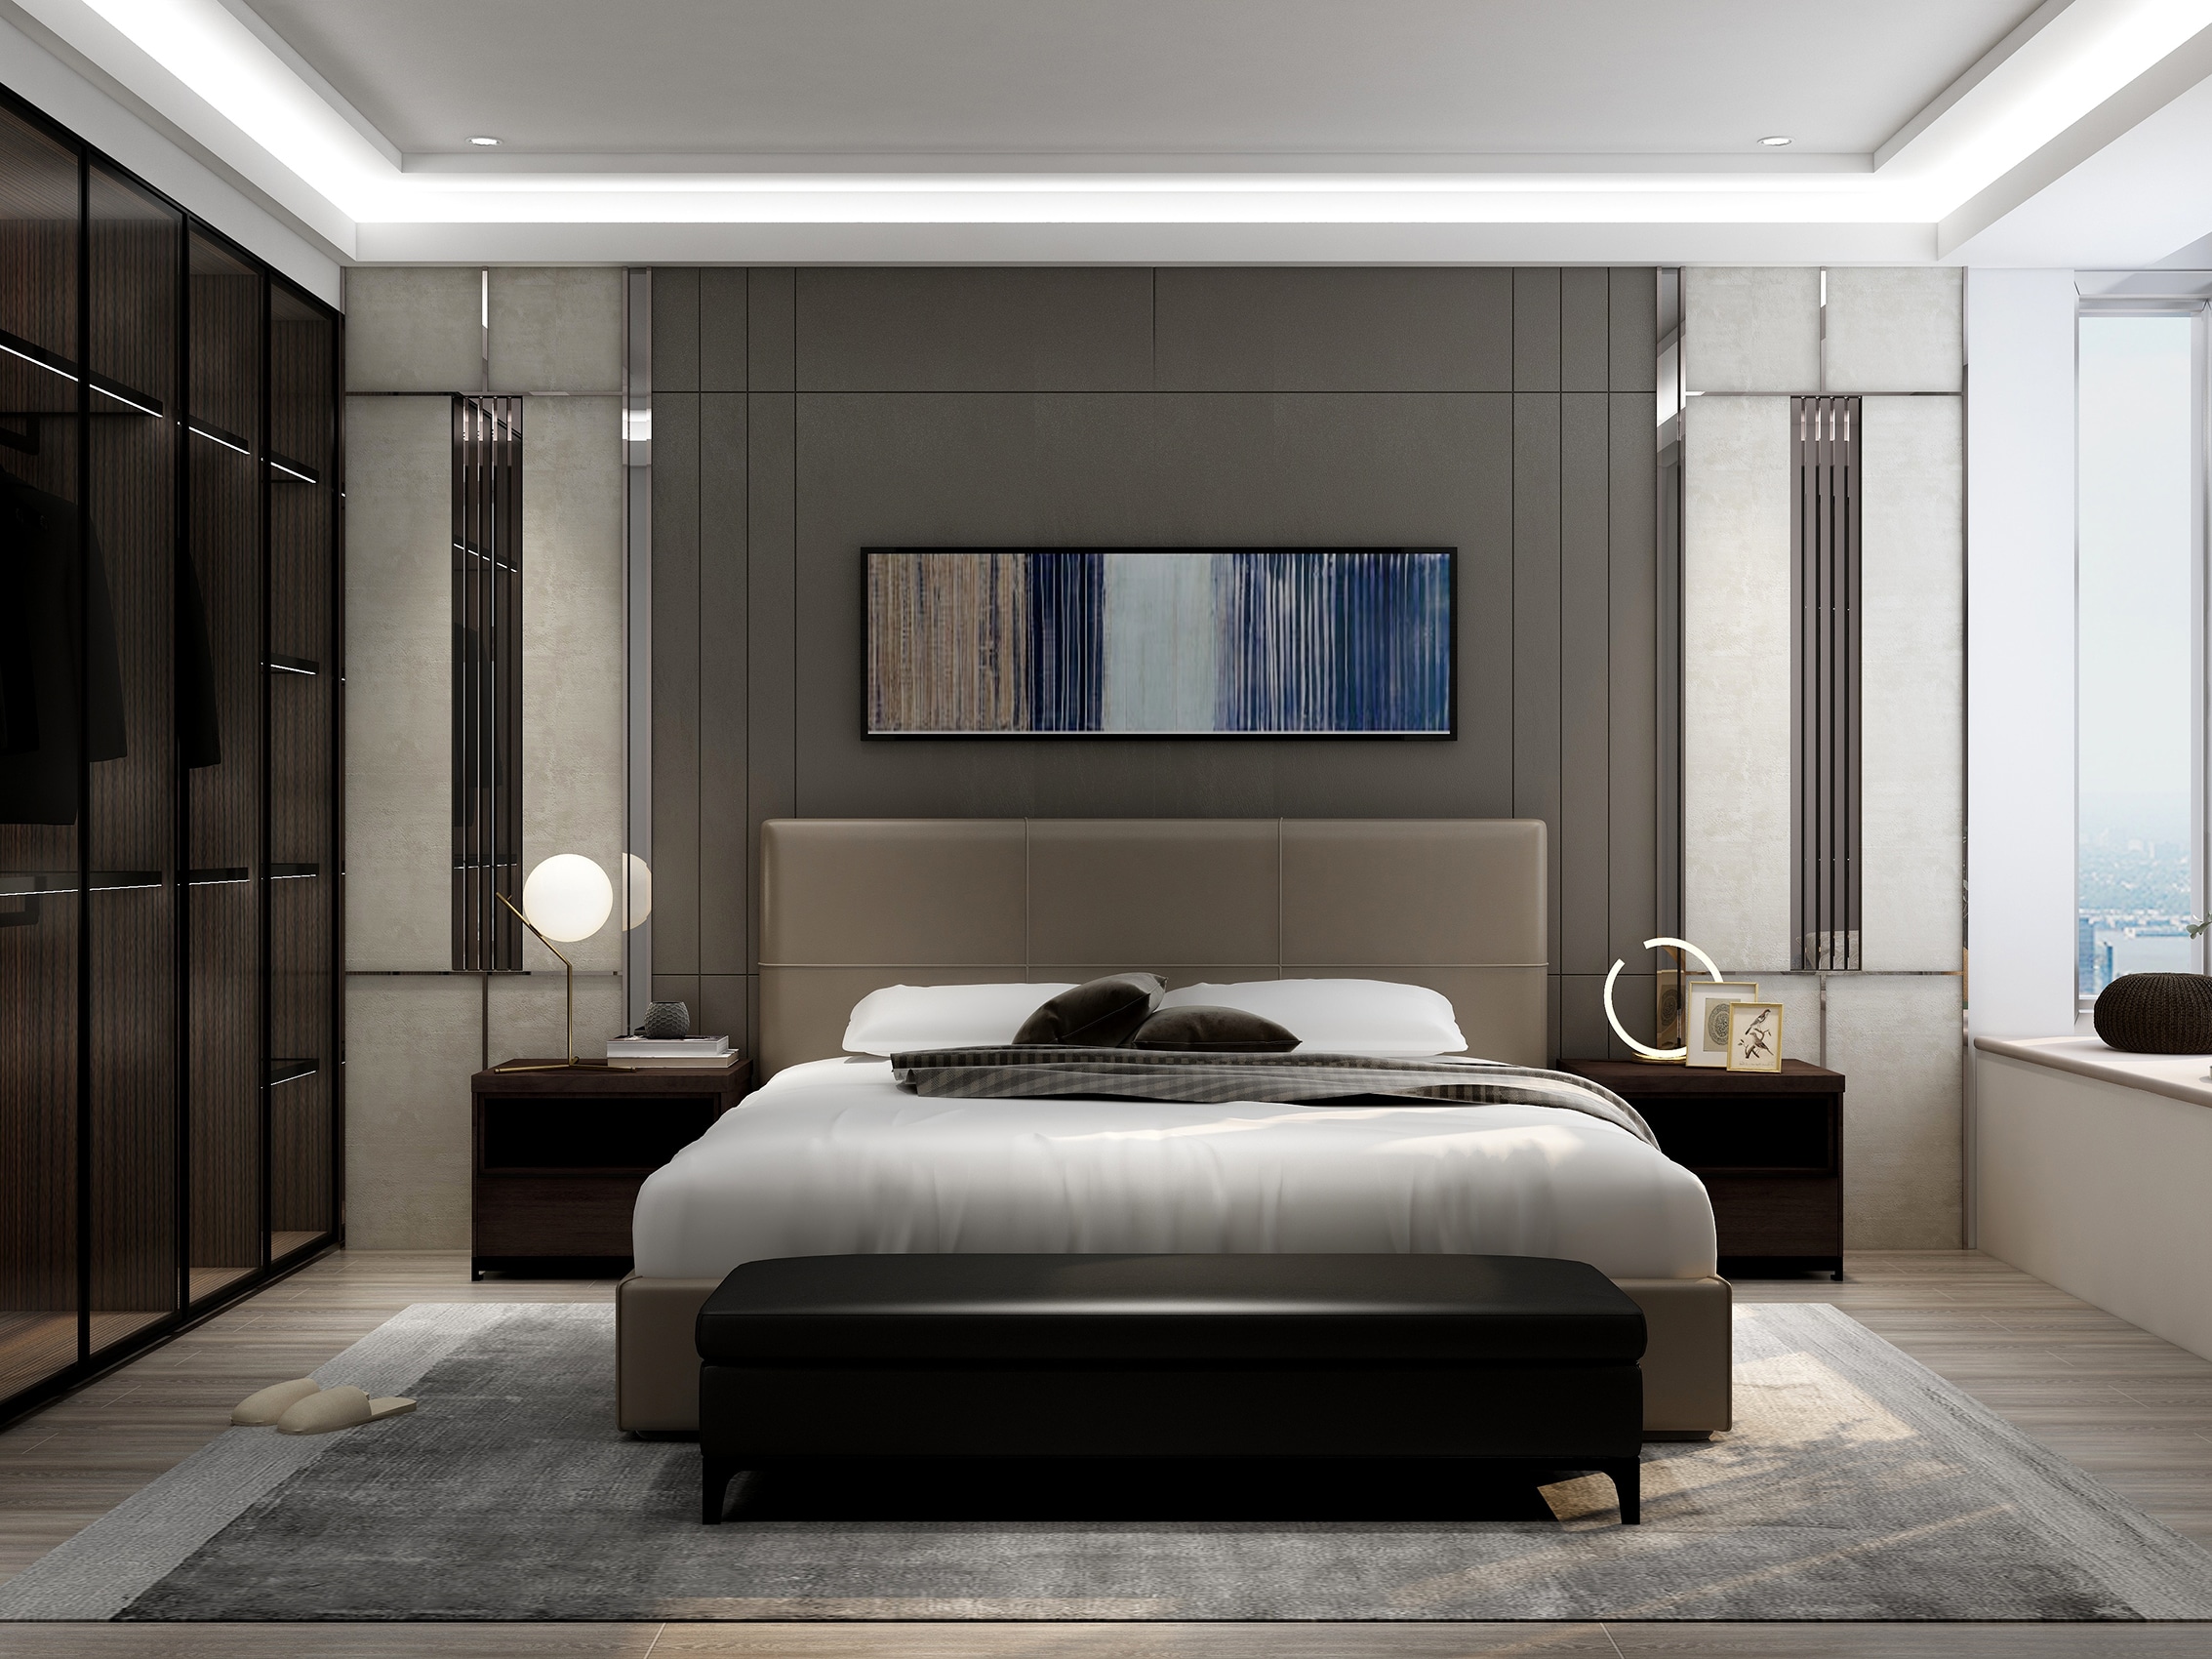 Screen Bed - A Proper Interpretation to A Classic yet Modern Bedroom ...